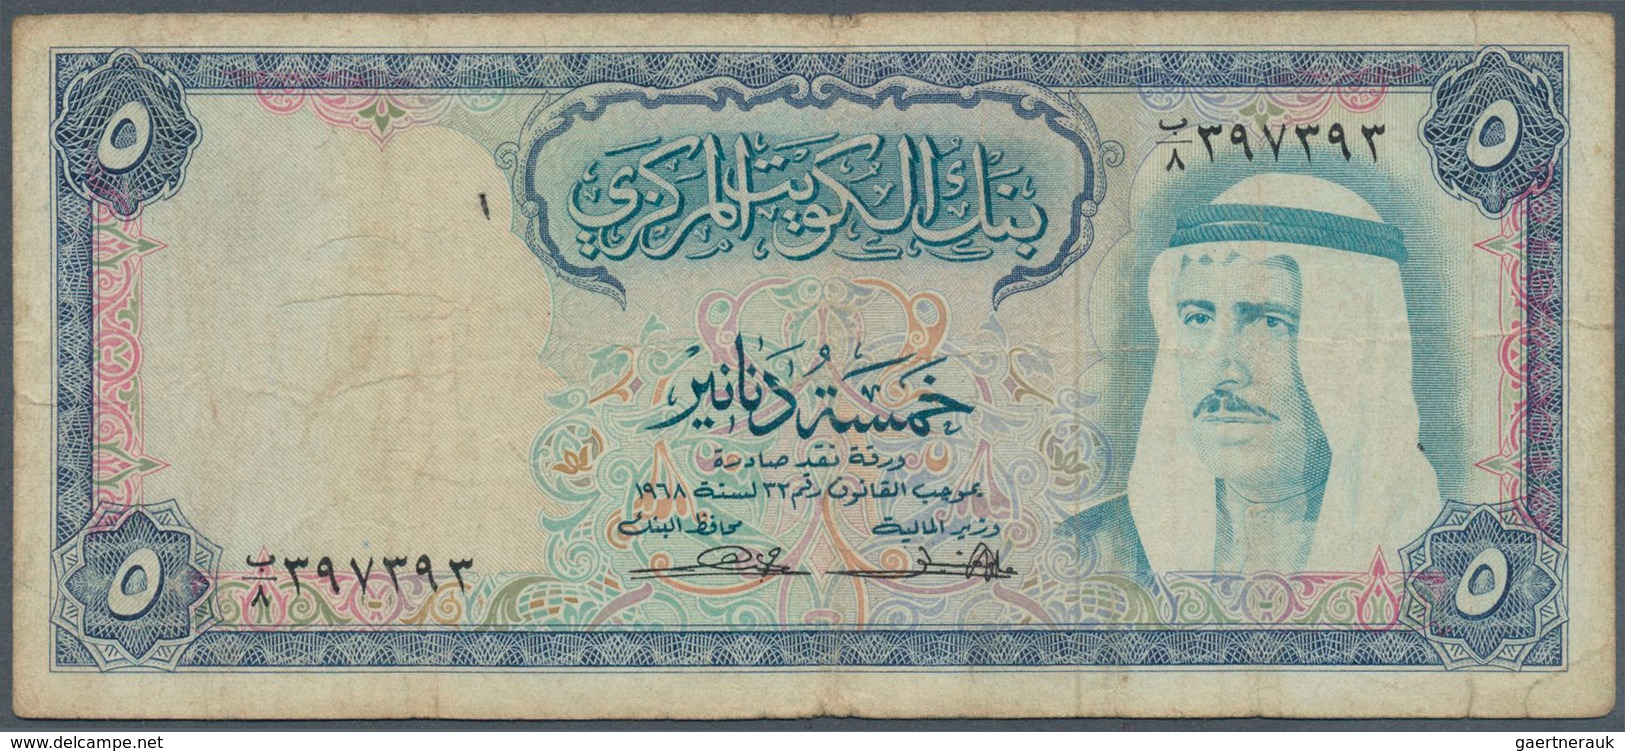 01920 Kuwait: 5 Dinars L.1968 Wit RADAR Serial Number, P.9 In About F/F- - Koeweit